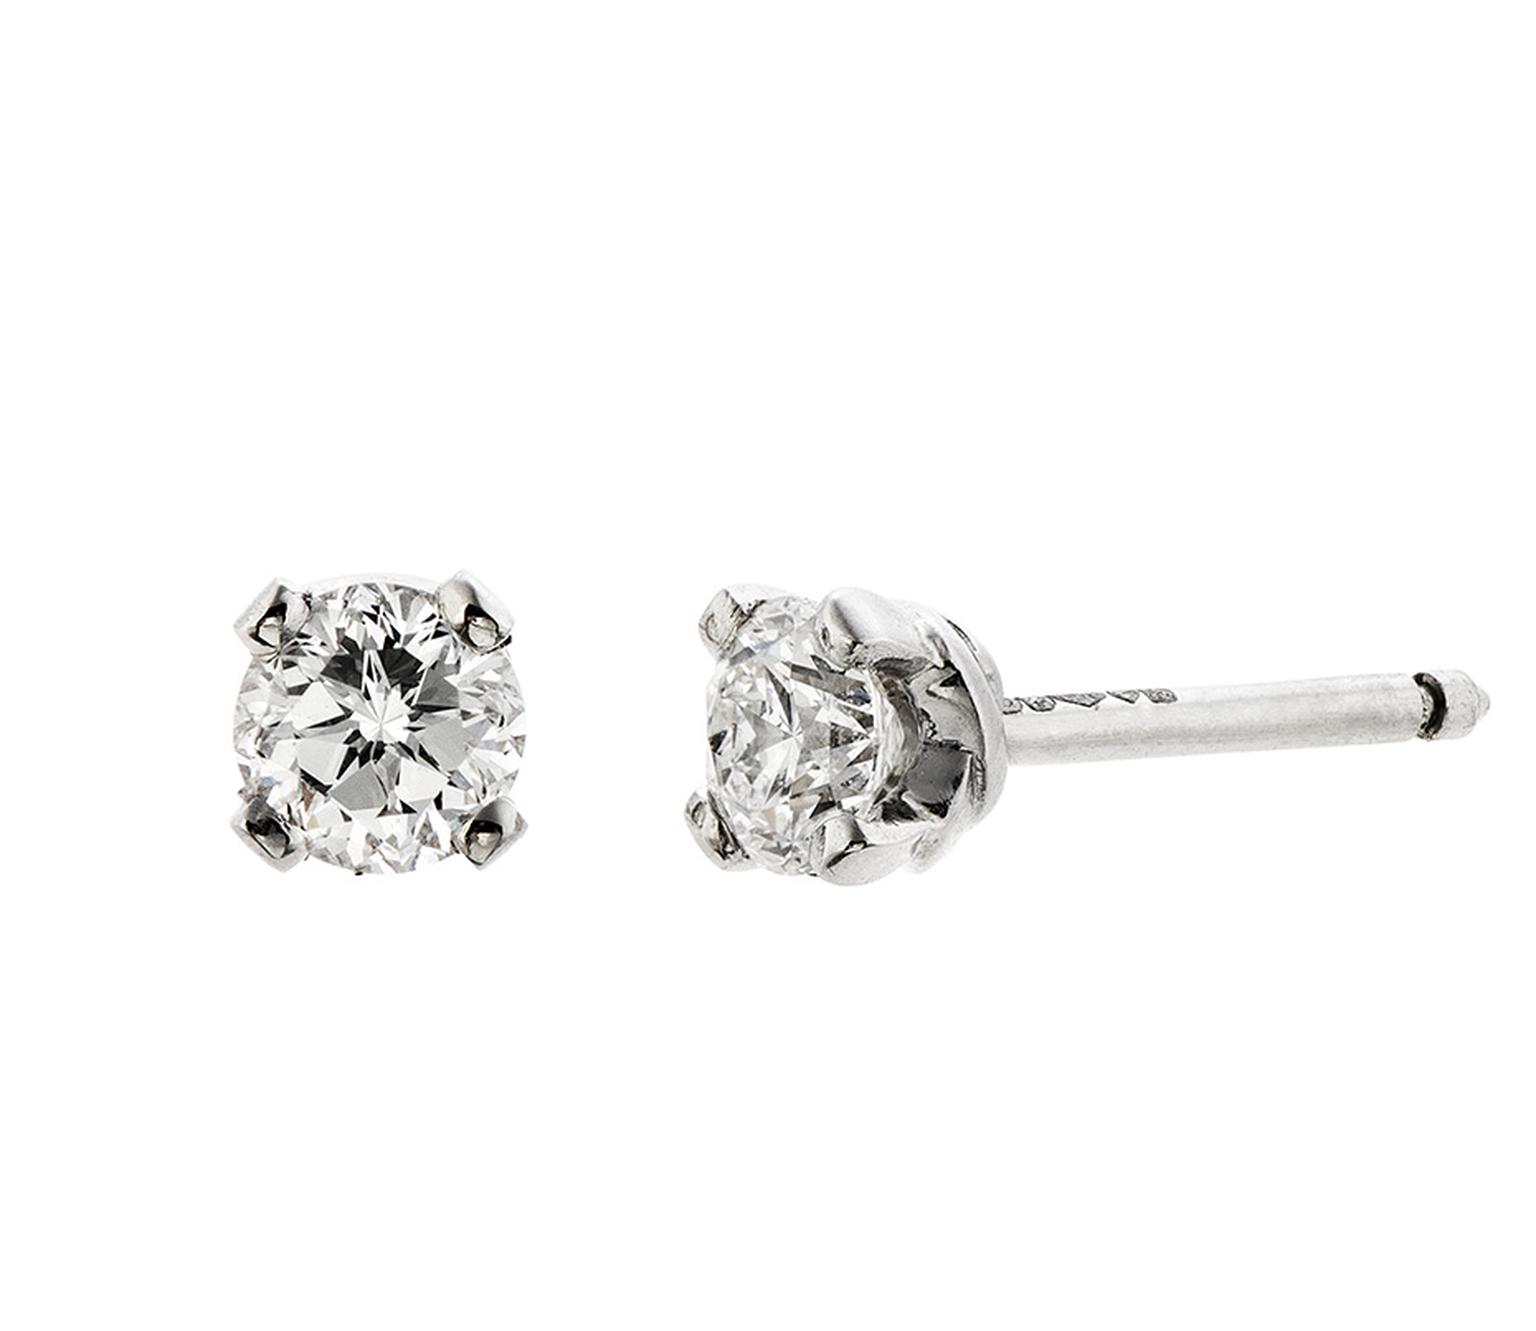 Garrard Eternal Cut solitaire diamond stud earrings